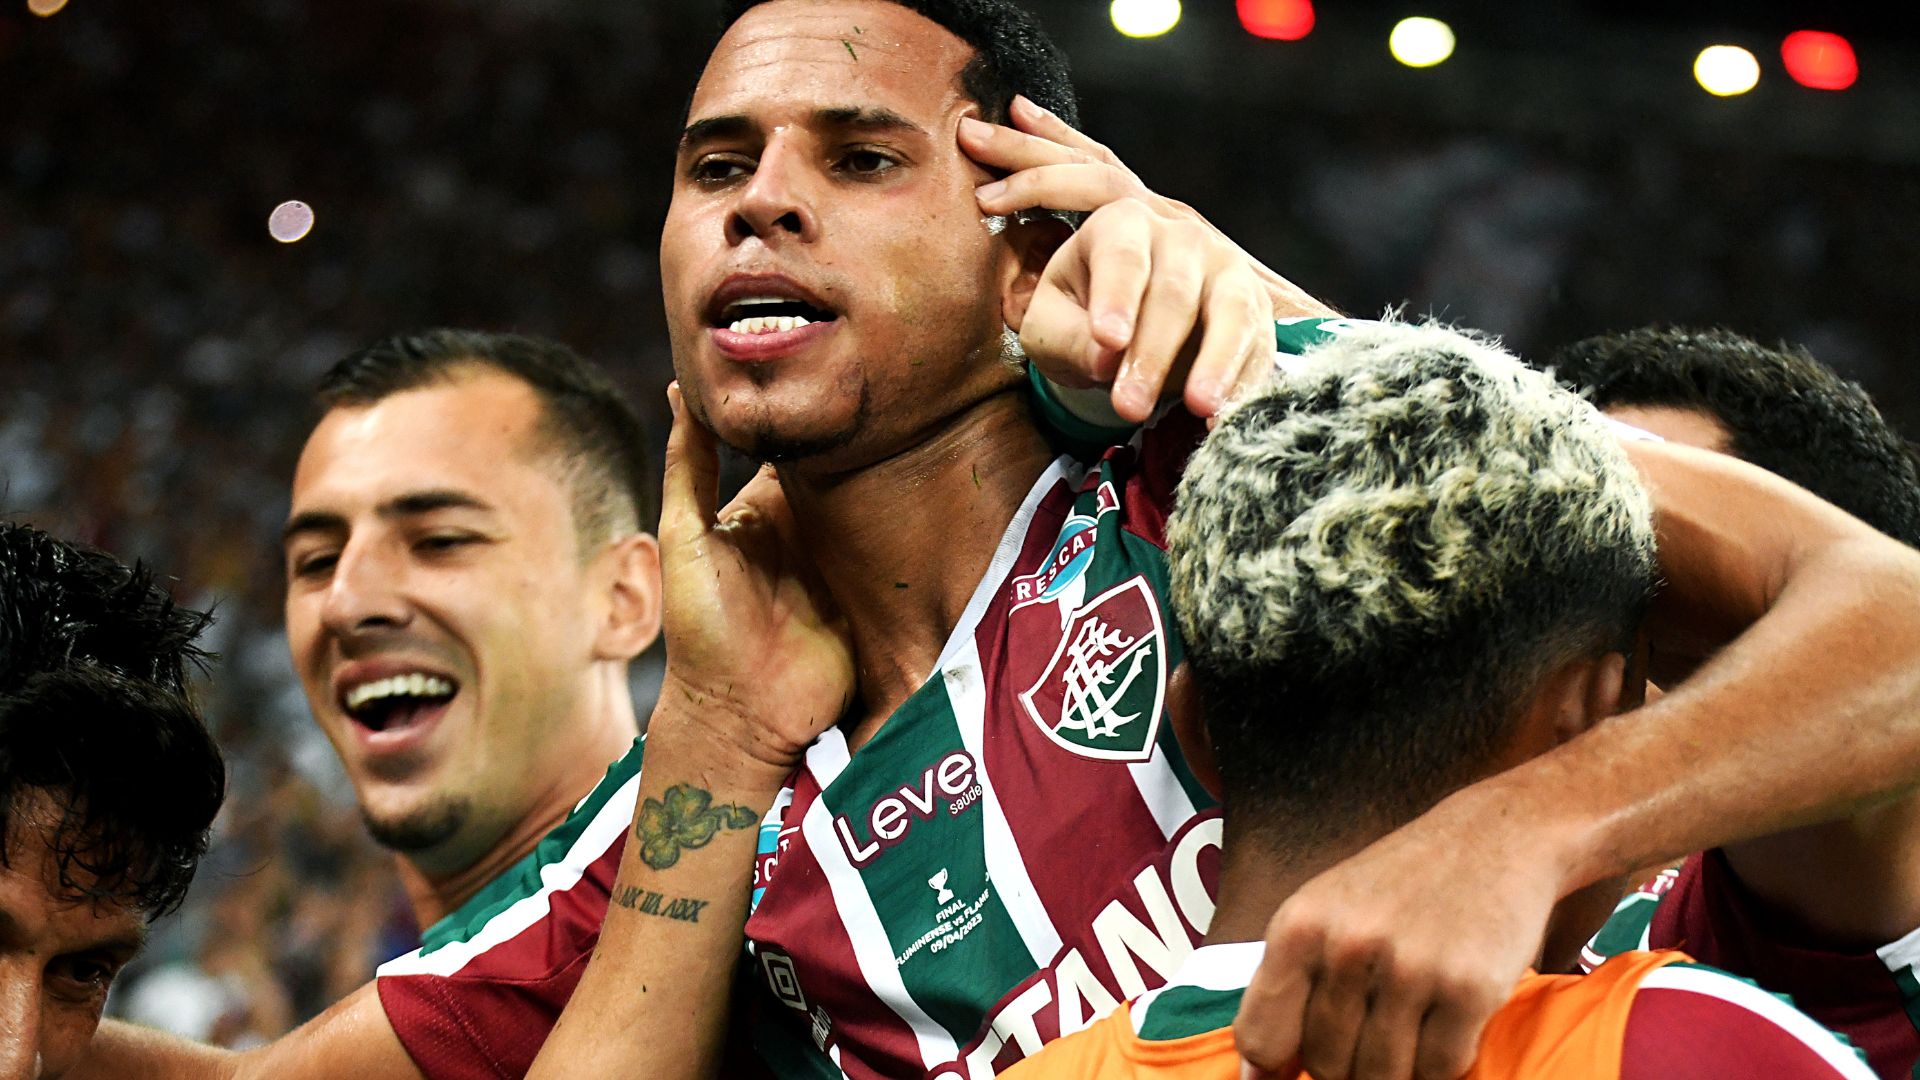 Aleksander celebrating a goal scored in the Carioca Championship final (Credit: Mailson Santana / Fluminense)